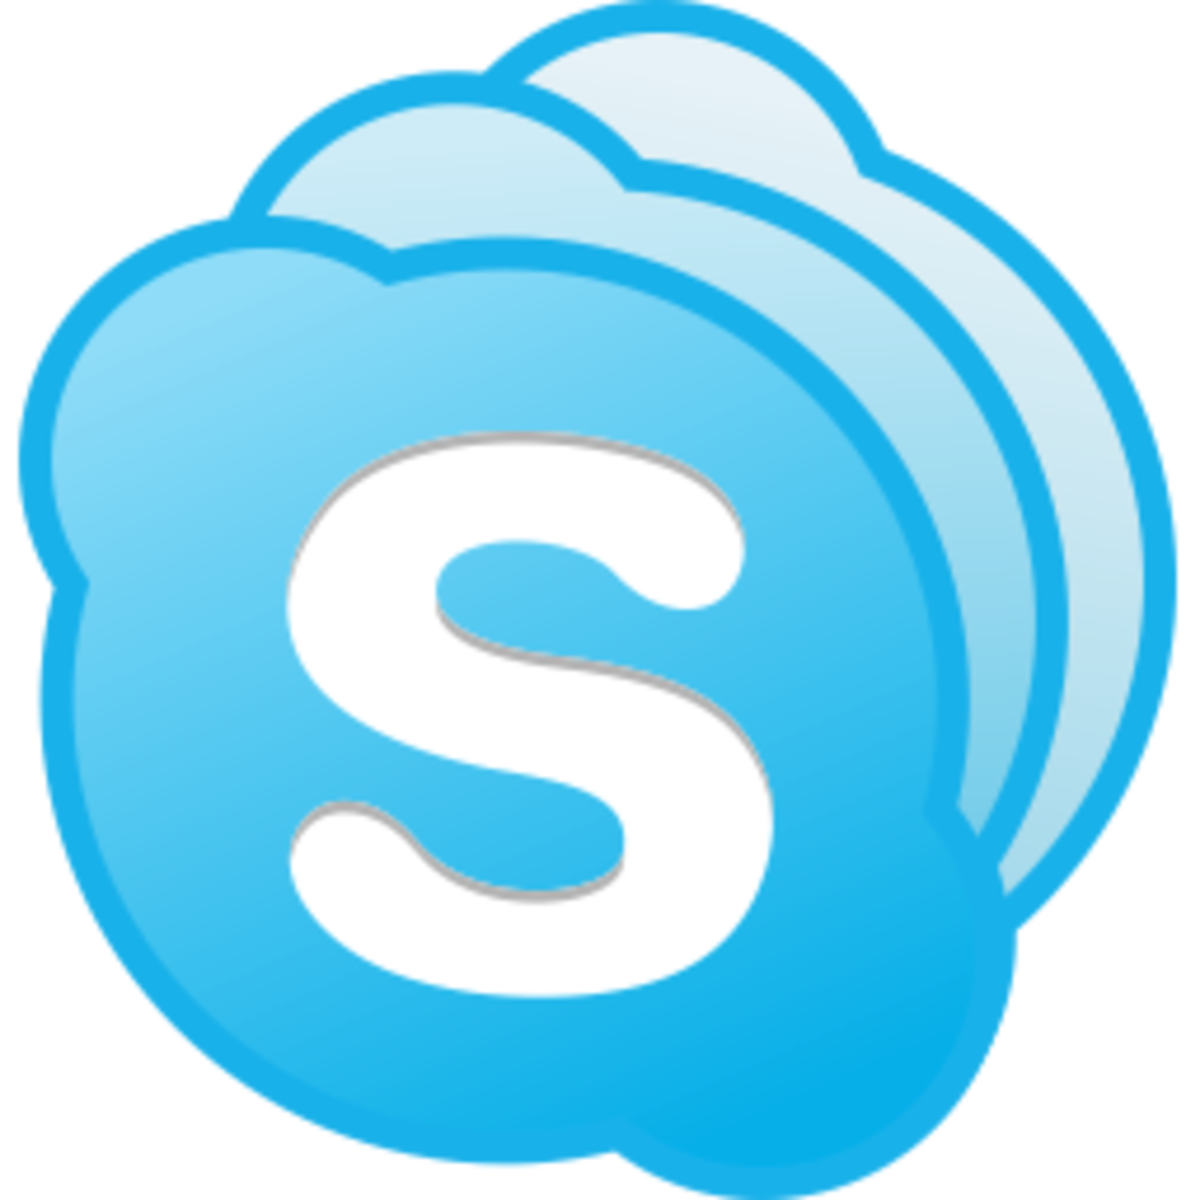 skype download free for windows xp 32 bit